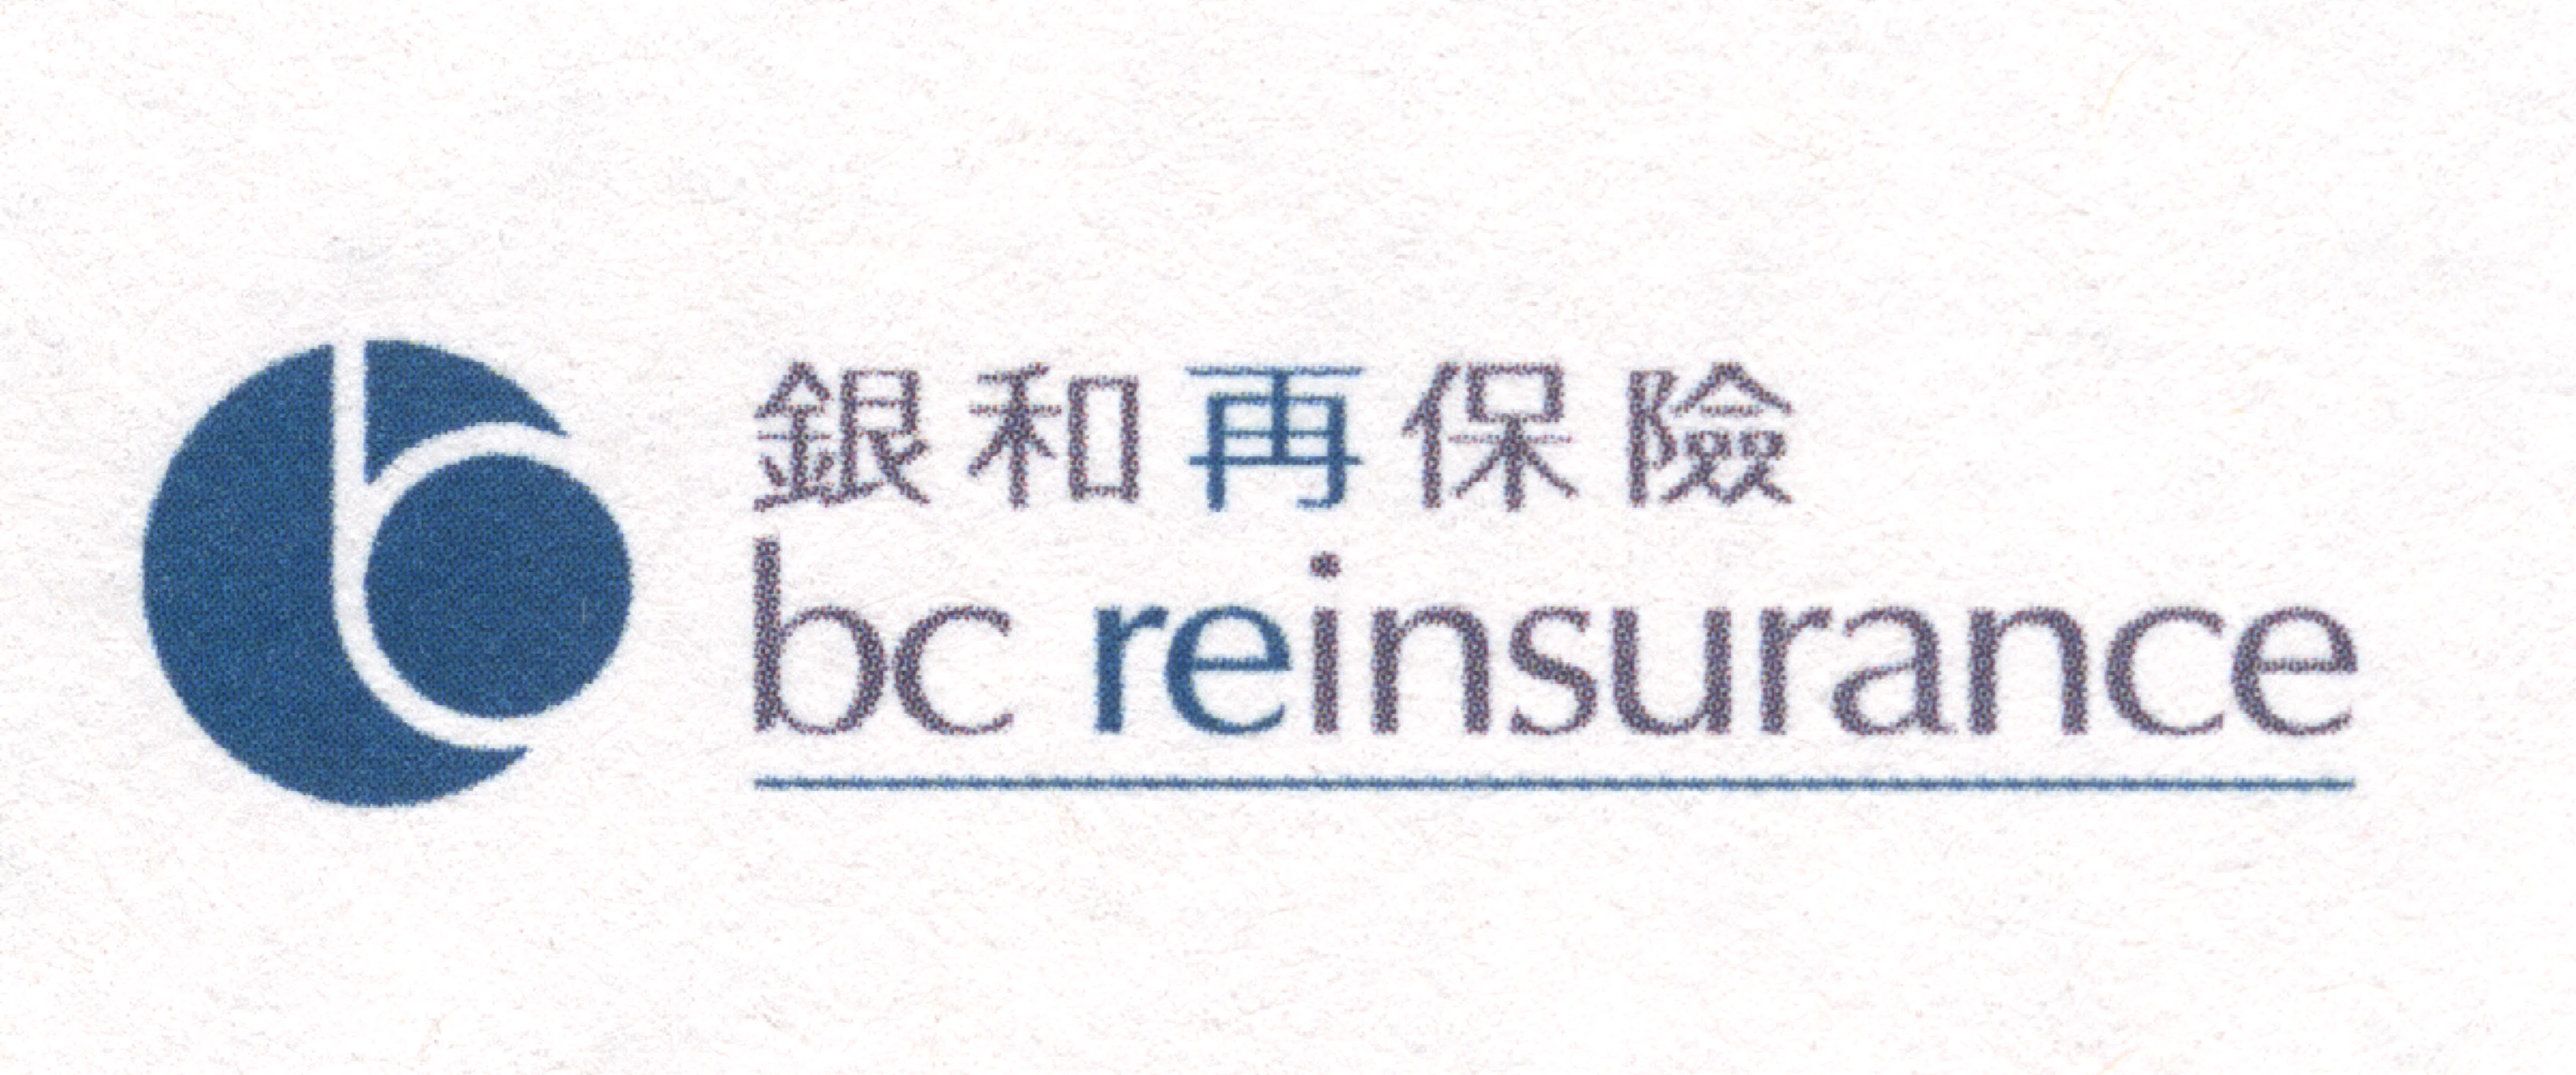 bc reinsurance